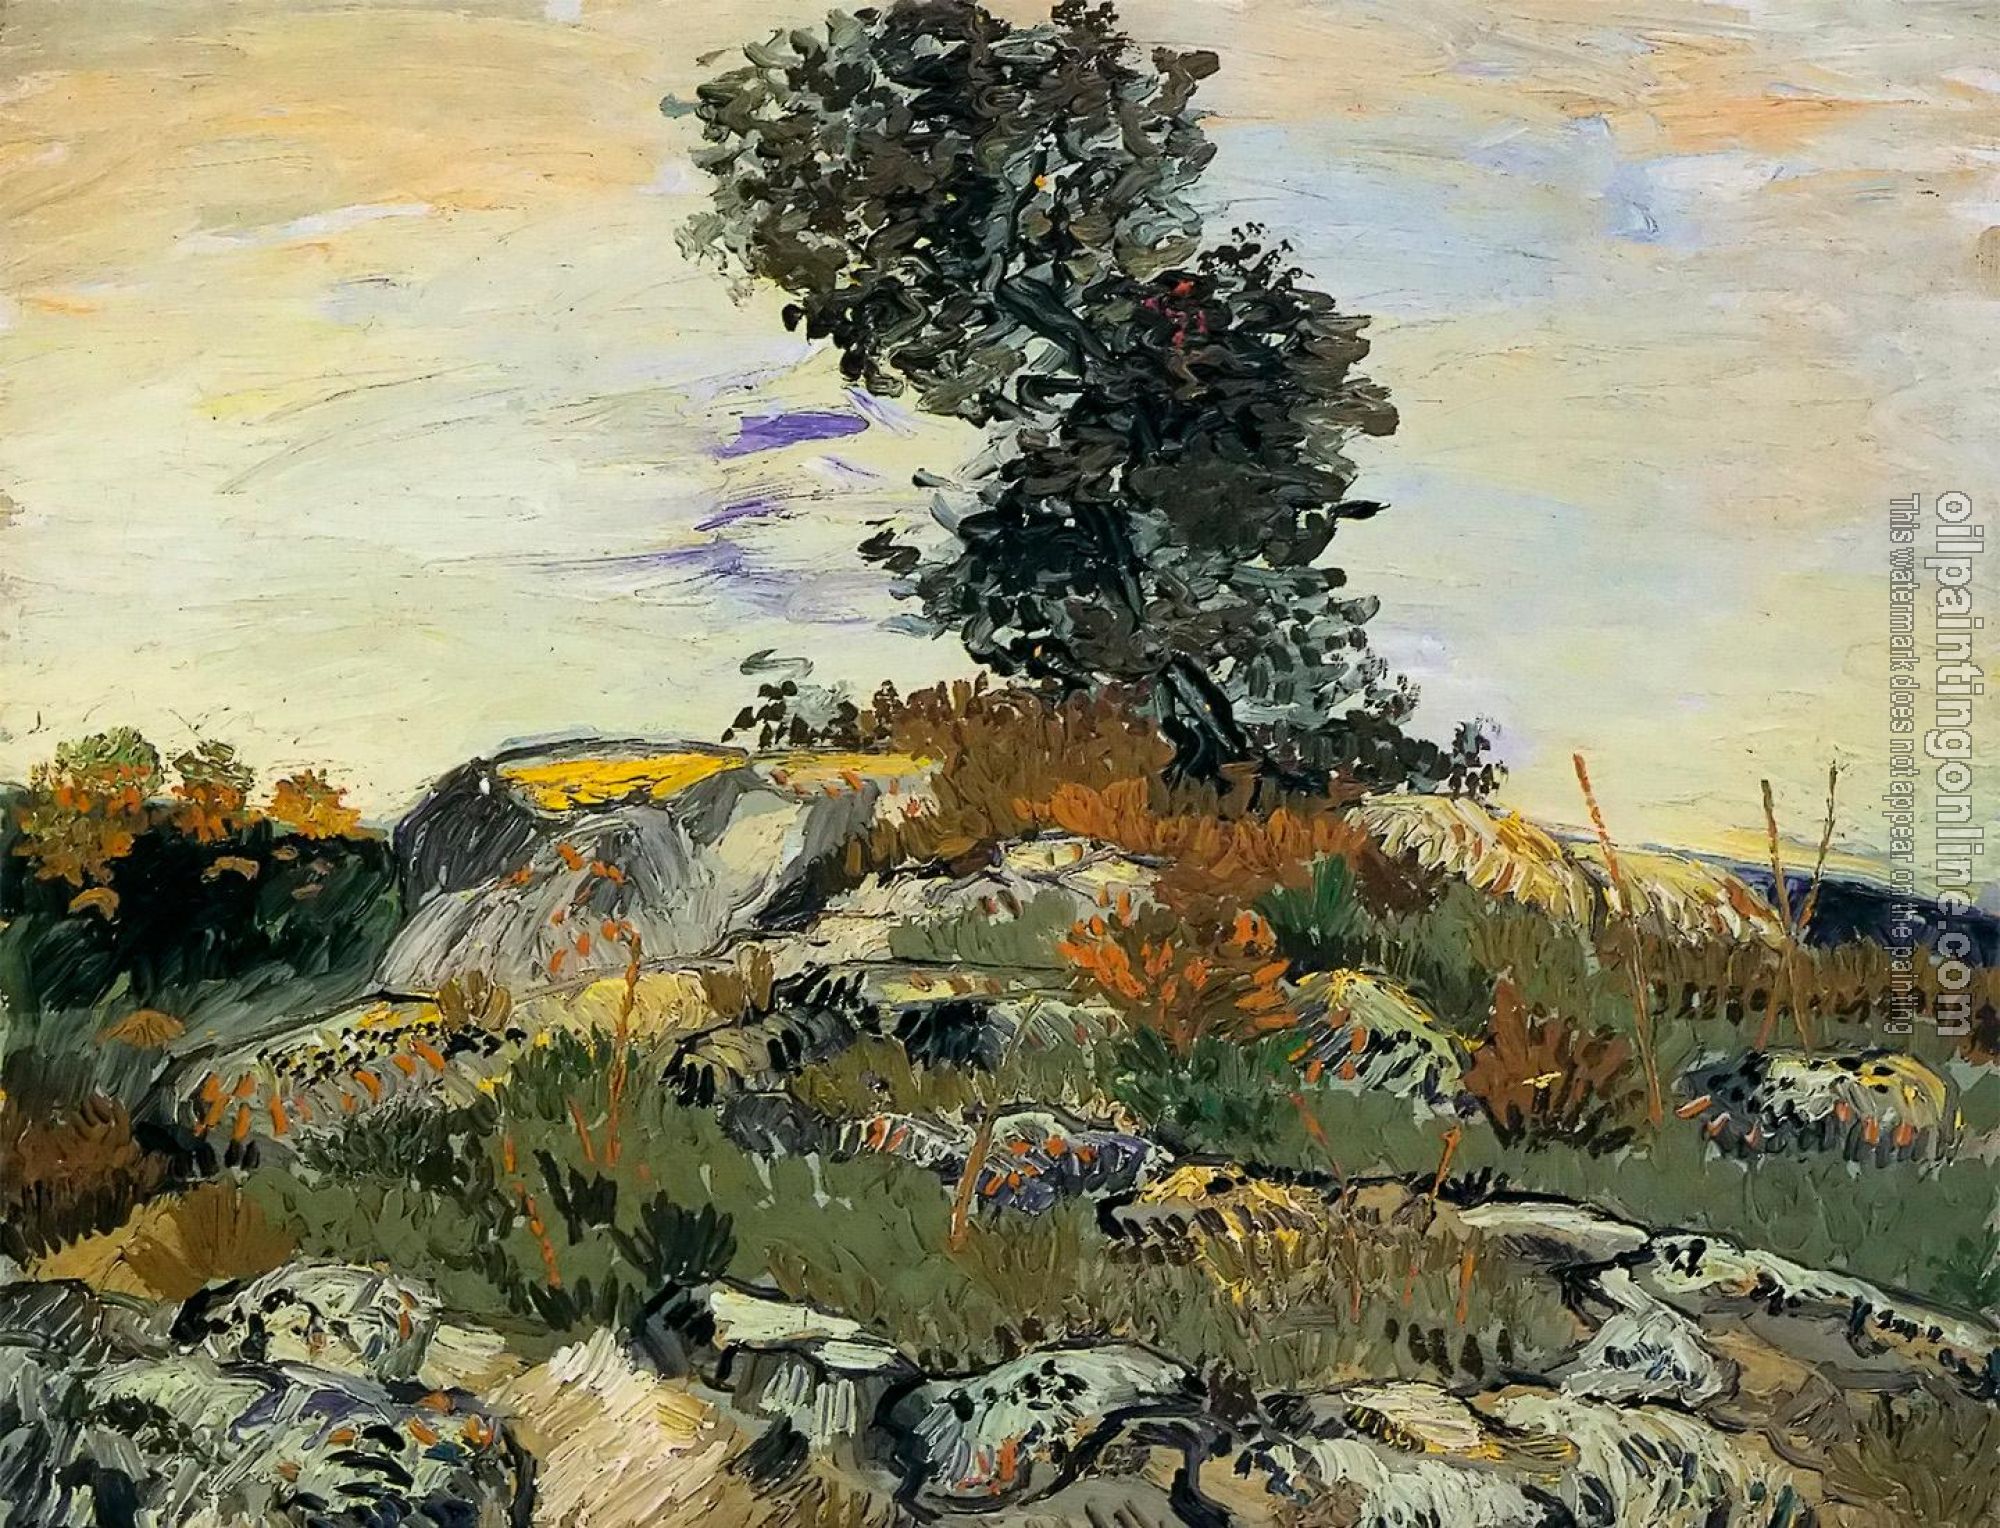 Gogh, Vincent van - Rocks with Tree